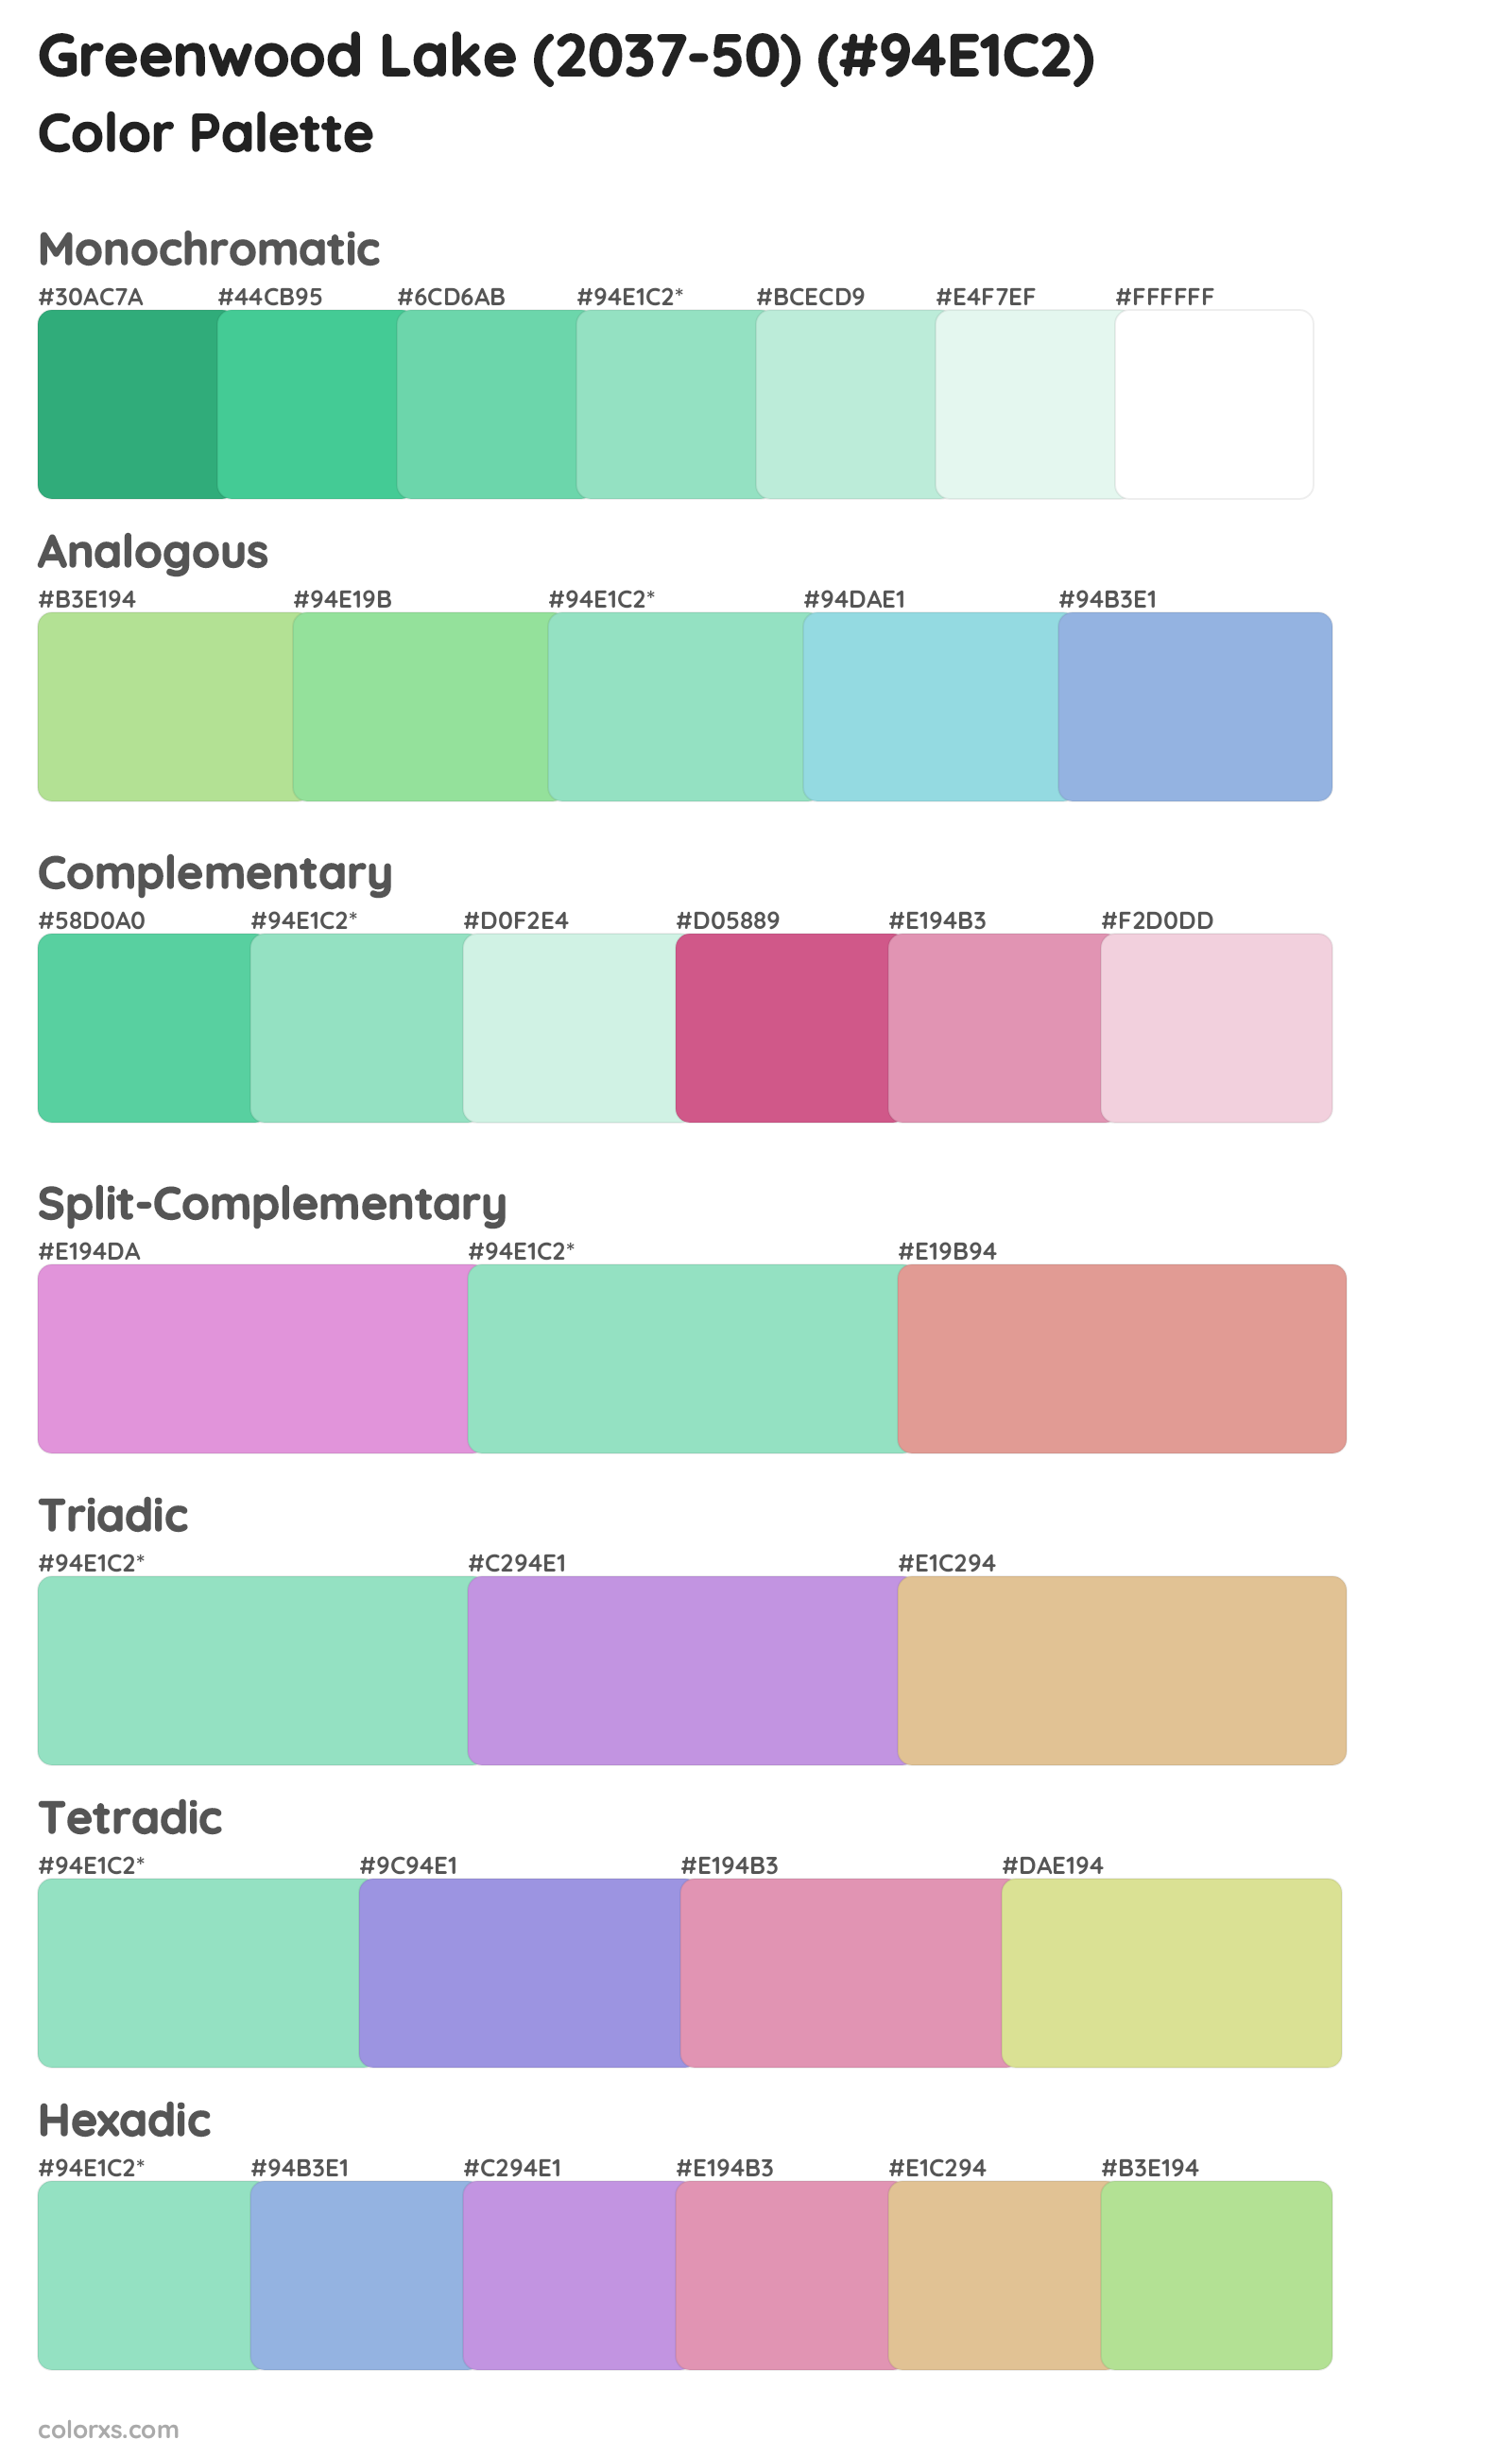 Greenwood Lake (2037-50) Color Scheme Palettes